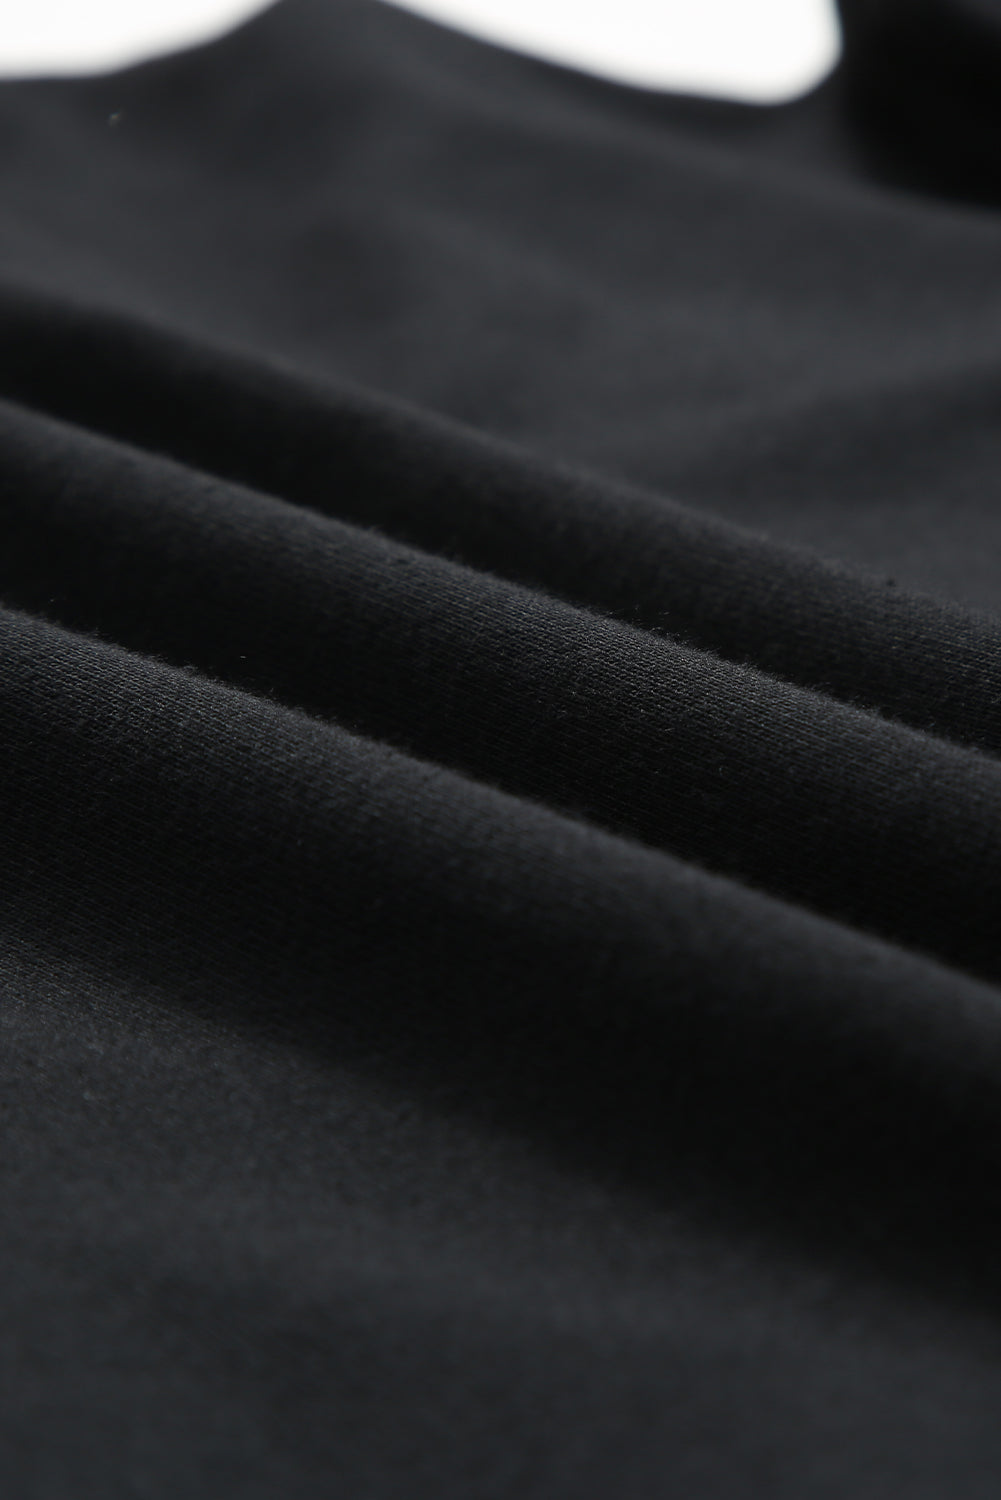 Črna puloverica za prosti čas z bleščicami in ženilskimi našitki